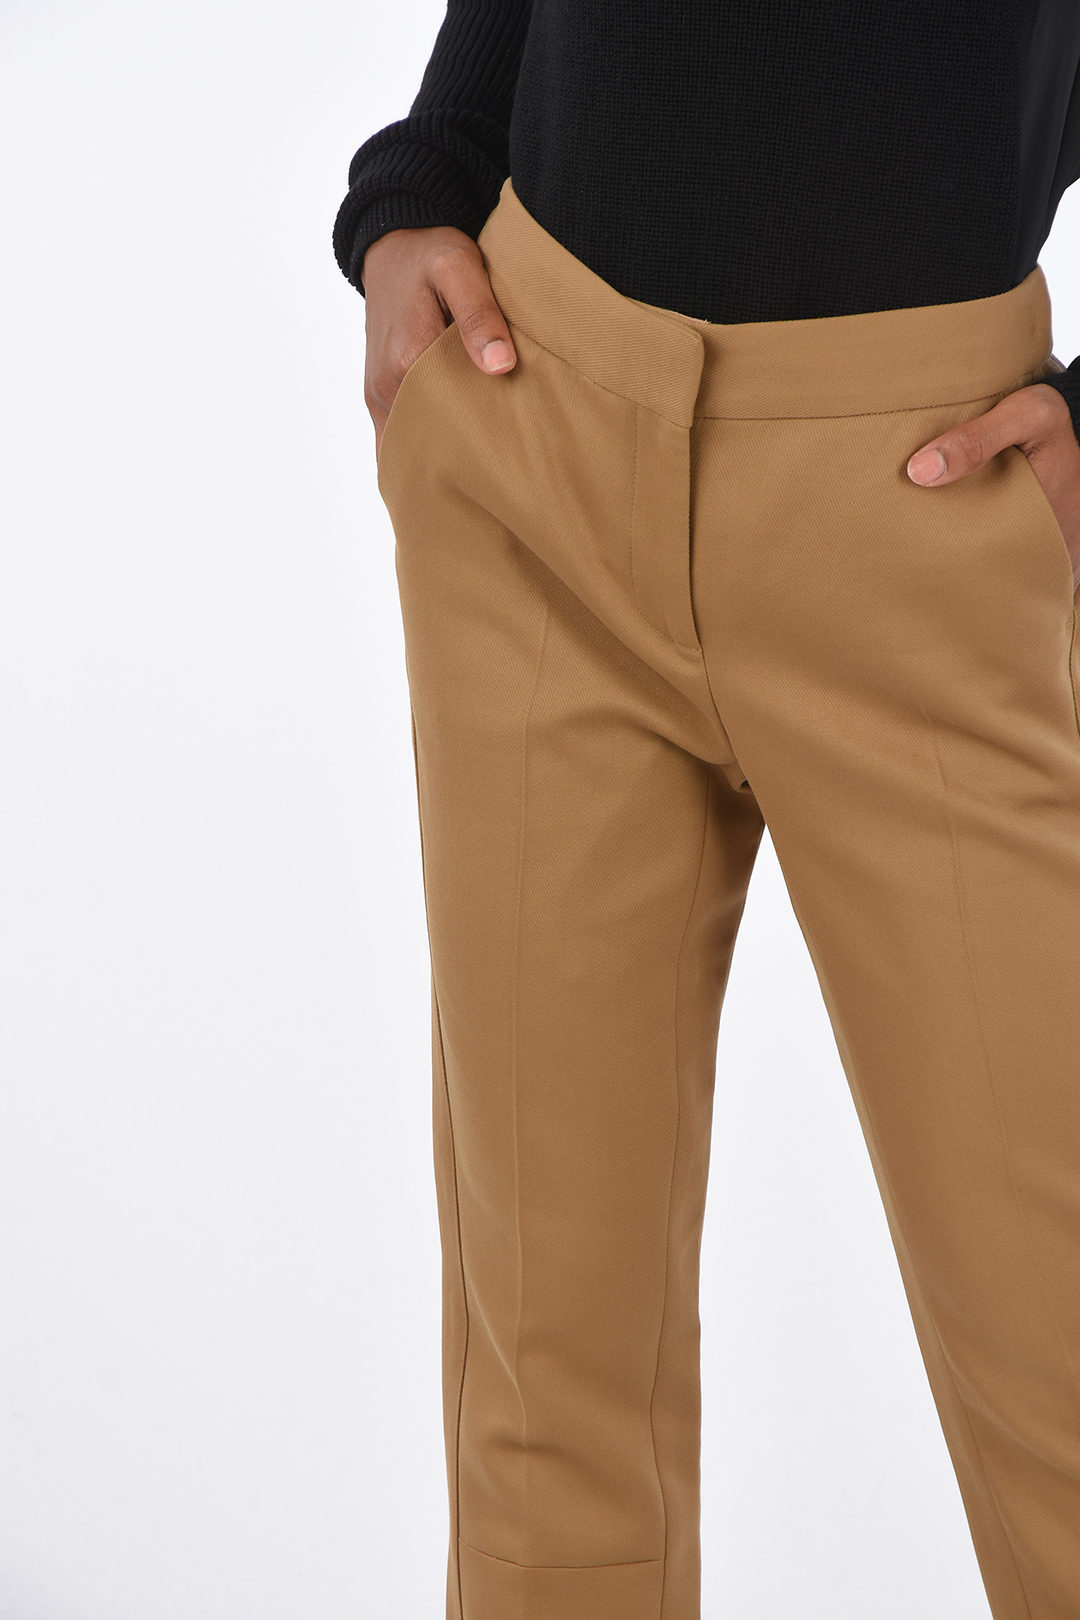 Tory Burch Jewel Button High Waist Cropped Pants women - Glamood Outlet